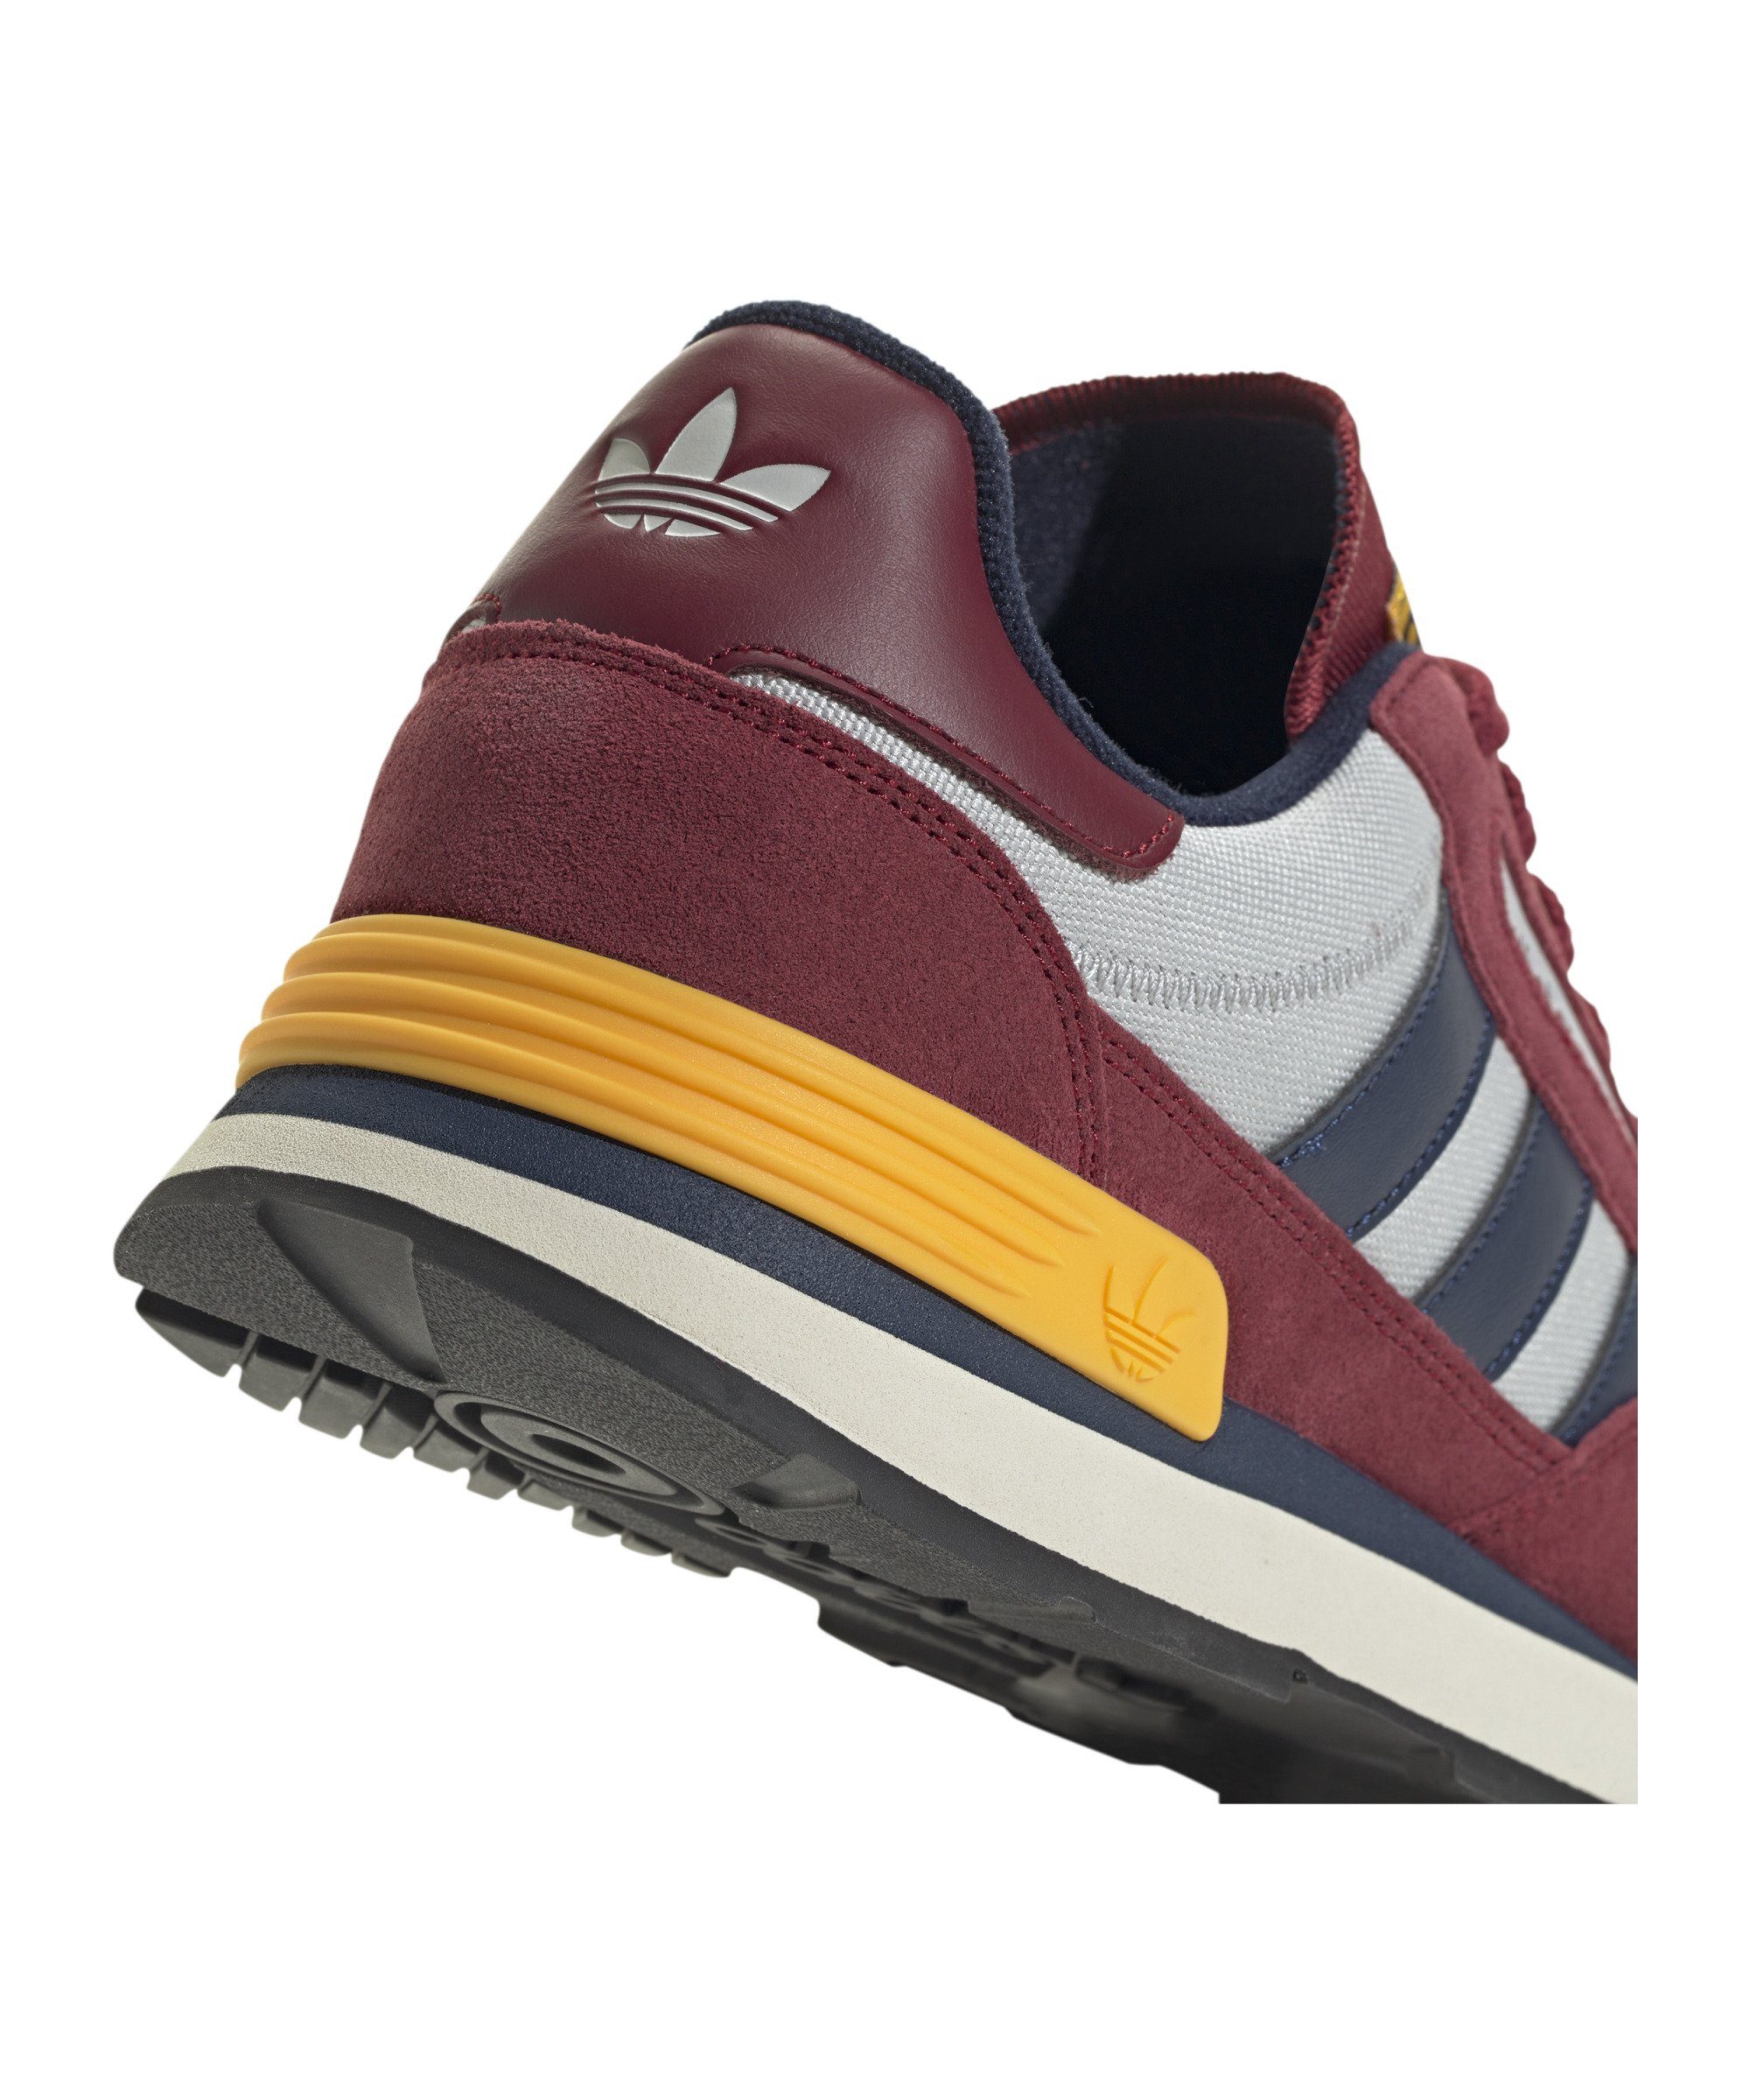 Treziod Sneaker Originals adidas 2